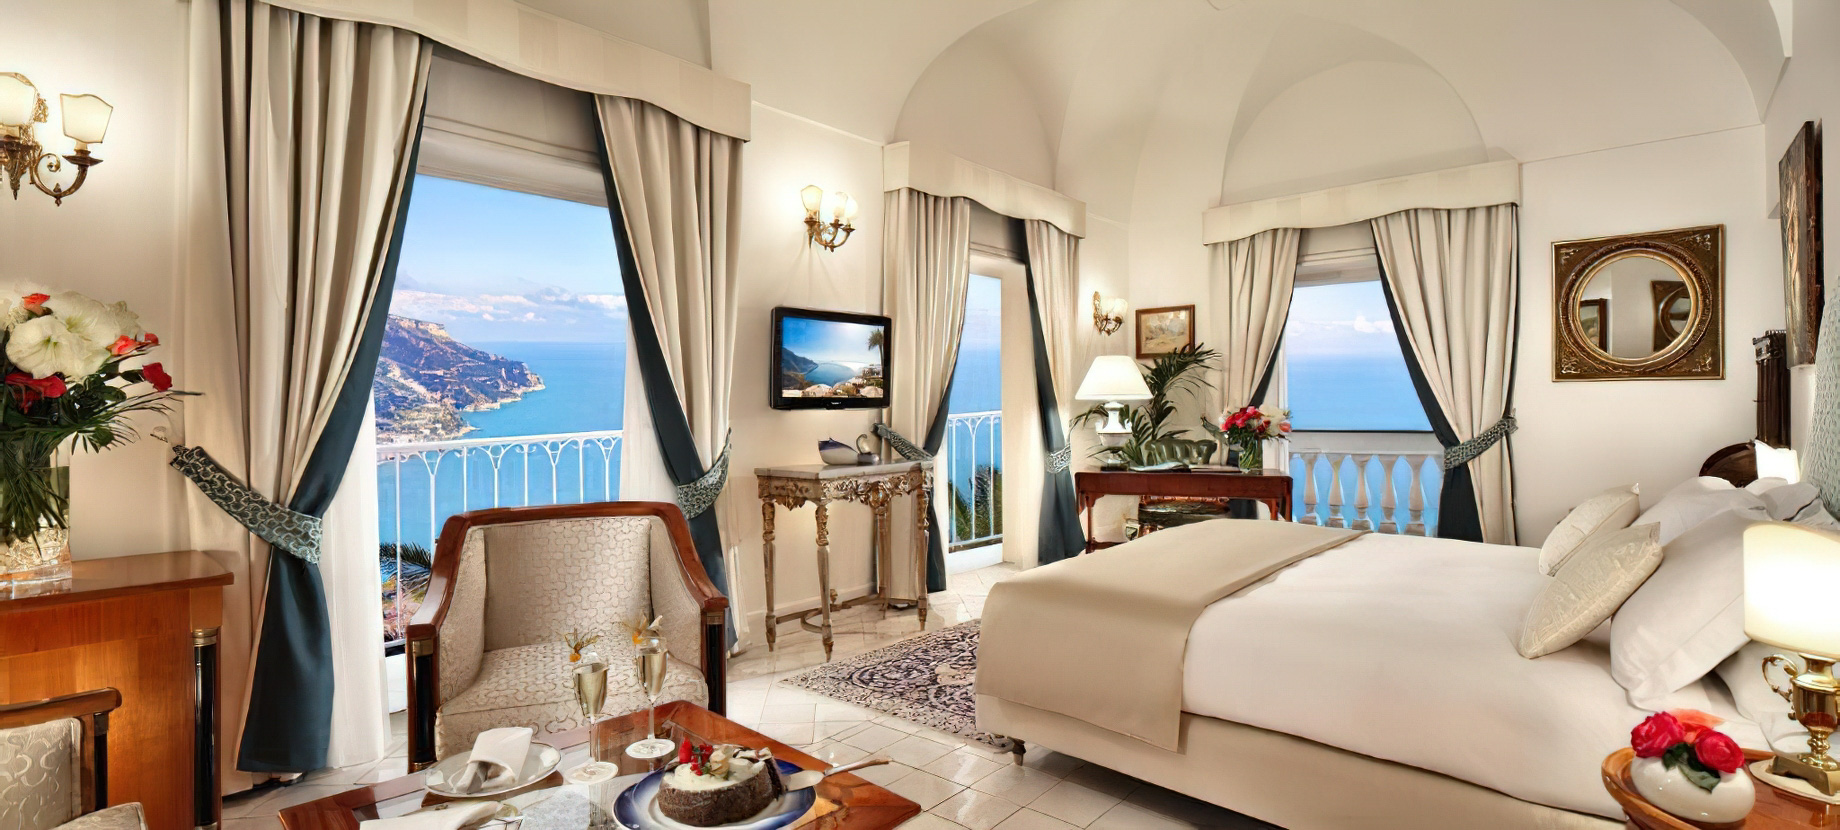 Palazzo Avino Hotel – Amalfi Coast, Ravello, Italy – Immenso Suite with Sea View